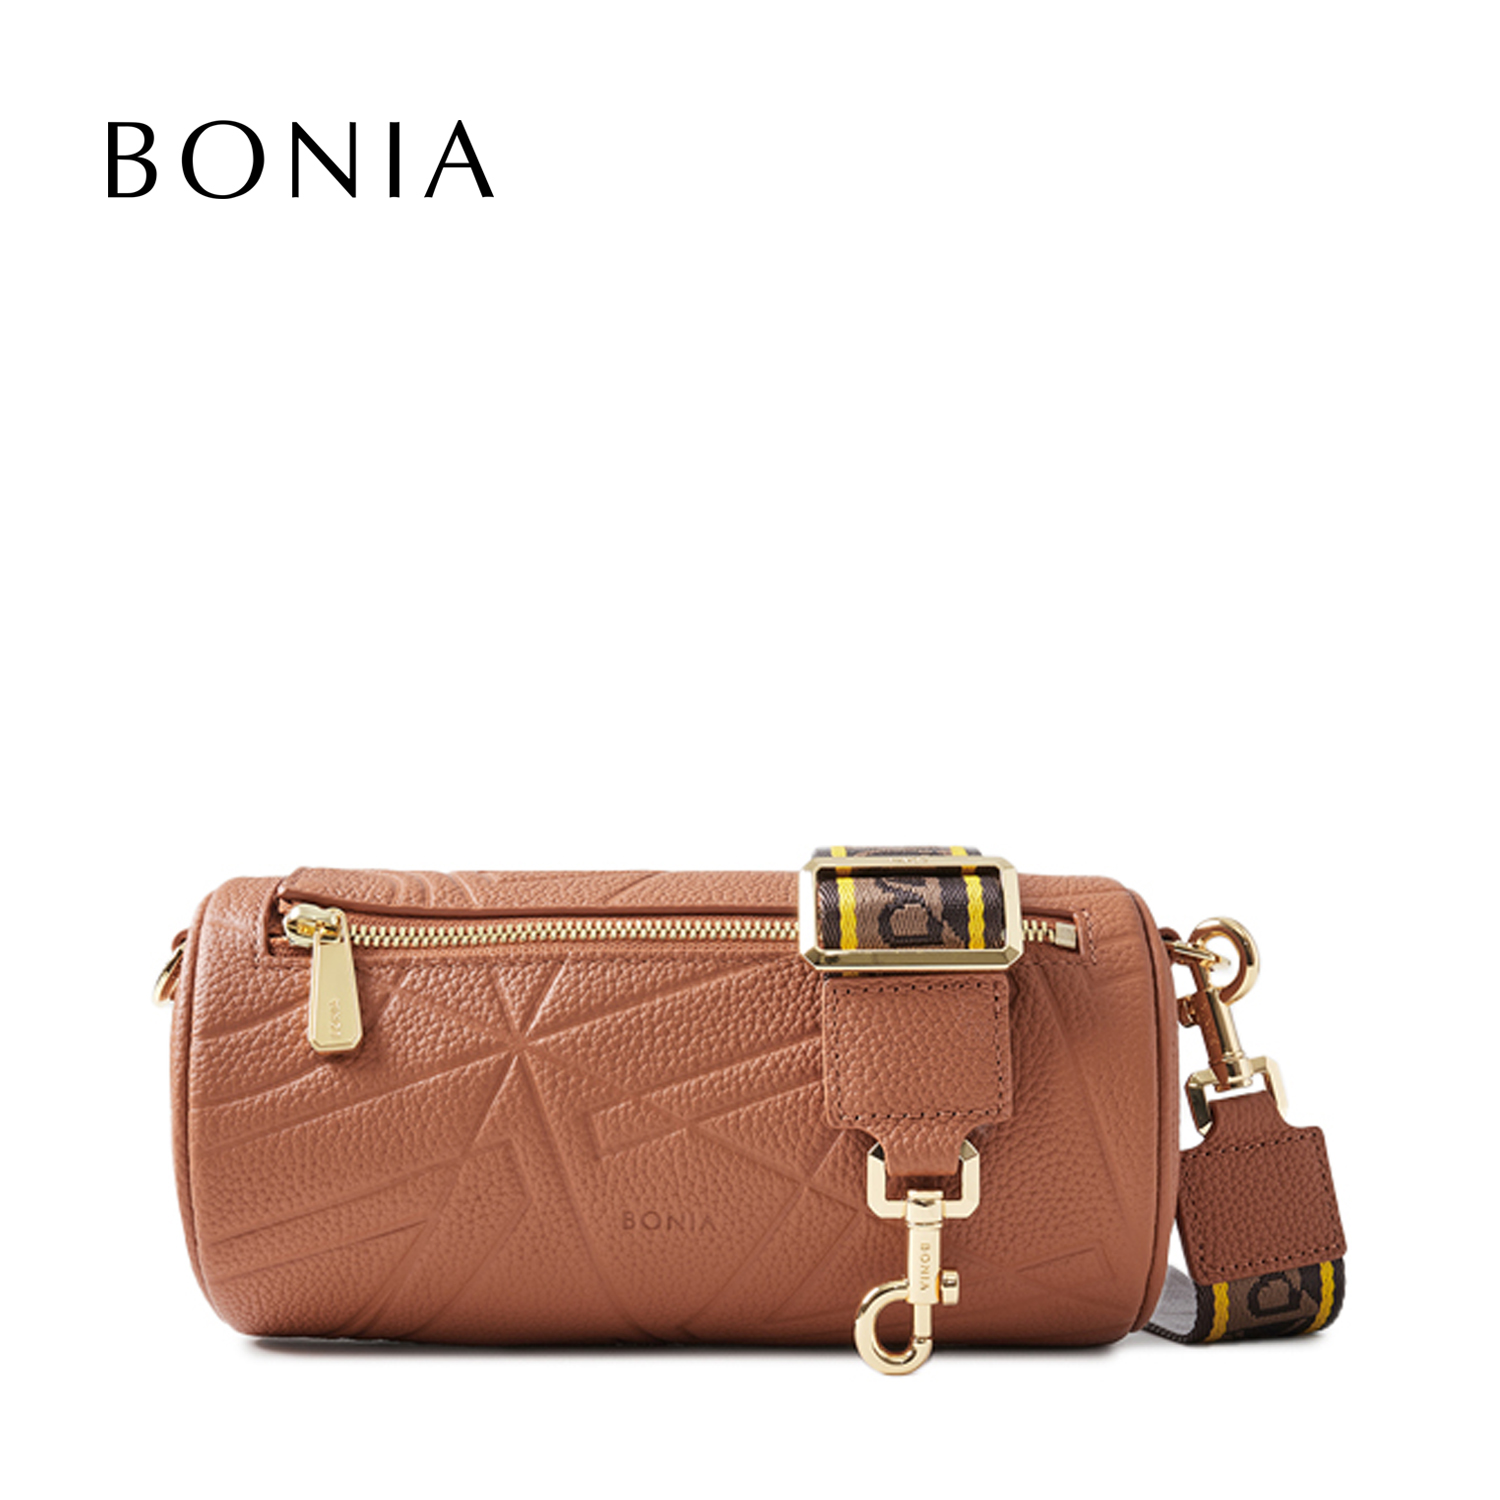 Bonia Camilla Crossbody Bag 860344-002